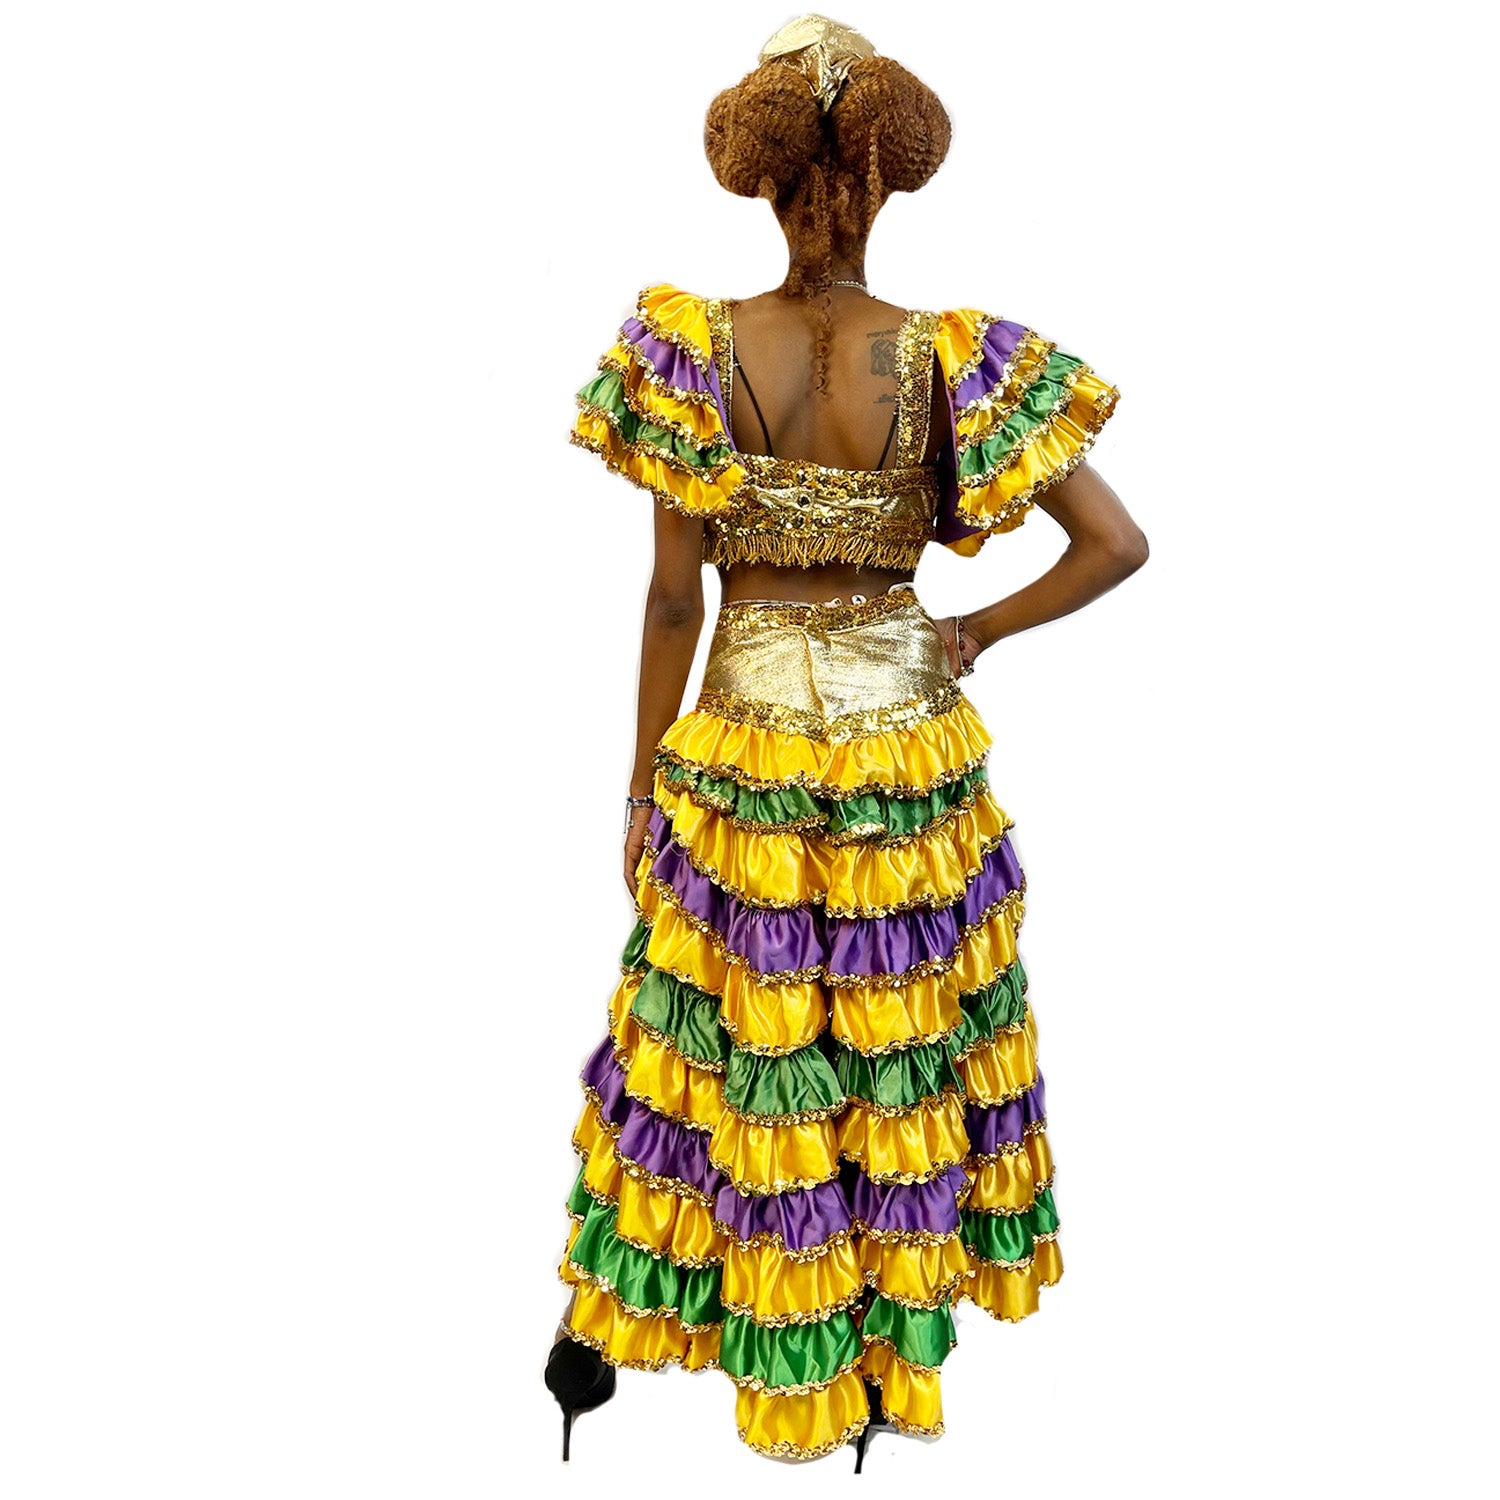 International Gold Rumba Women's Adult Costume